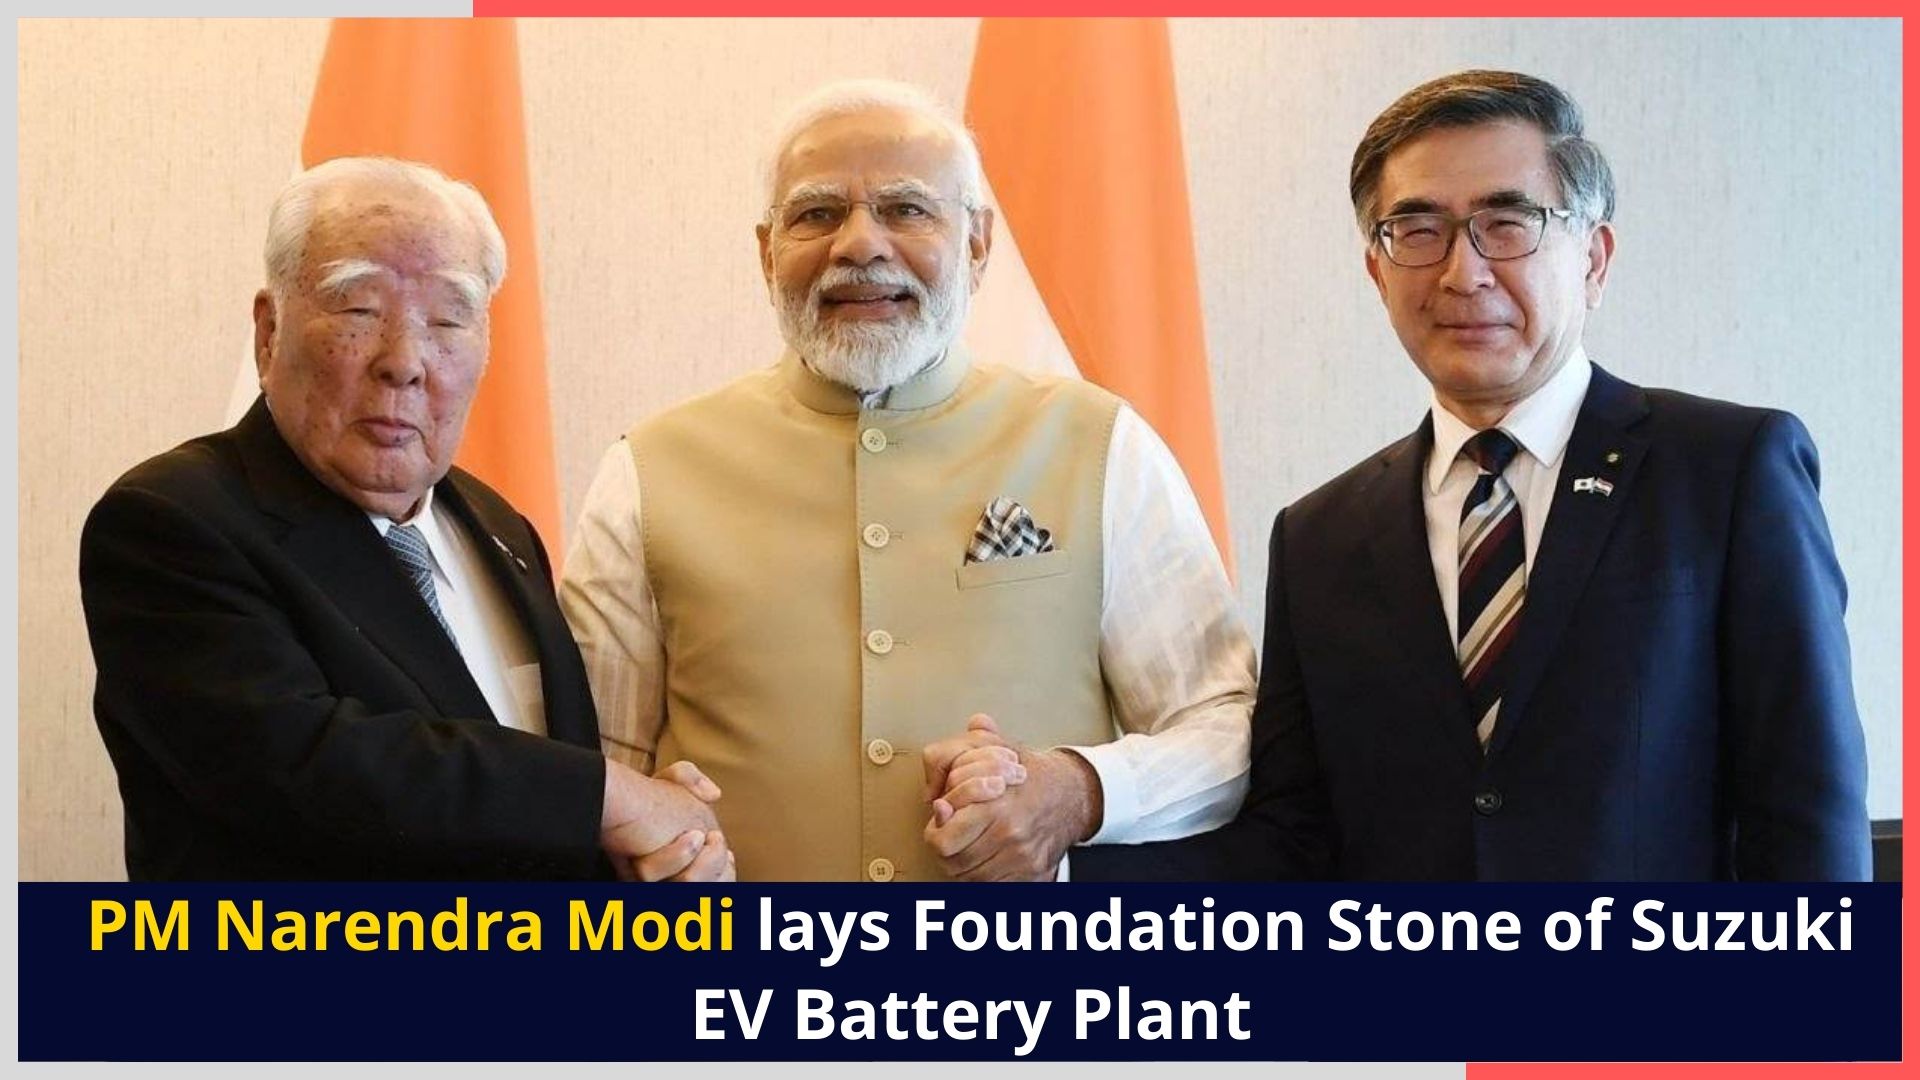 https://e-vehicleinfo.com/pm-narendra-modi-lays-foundation-stone-of-suzuki-ev-battery-plant/